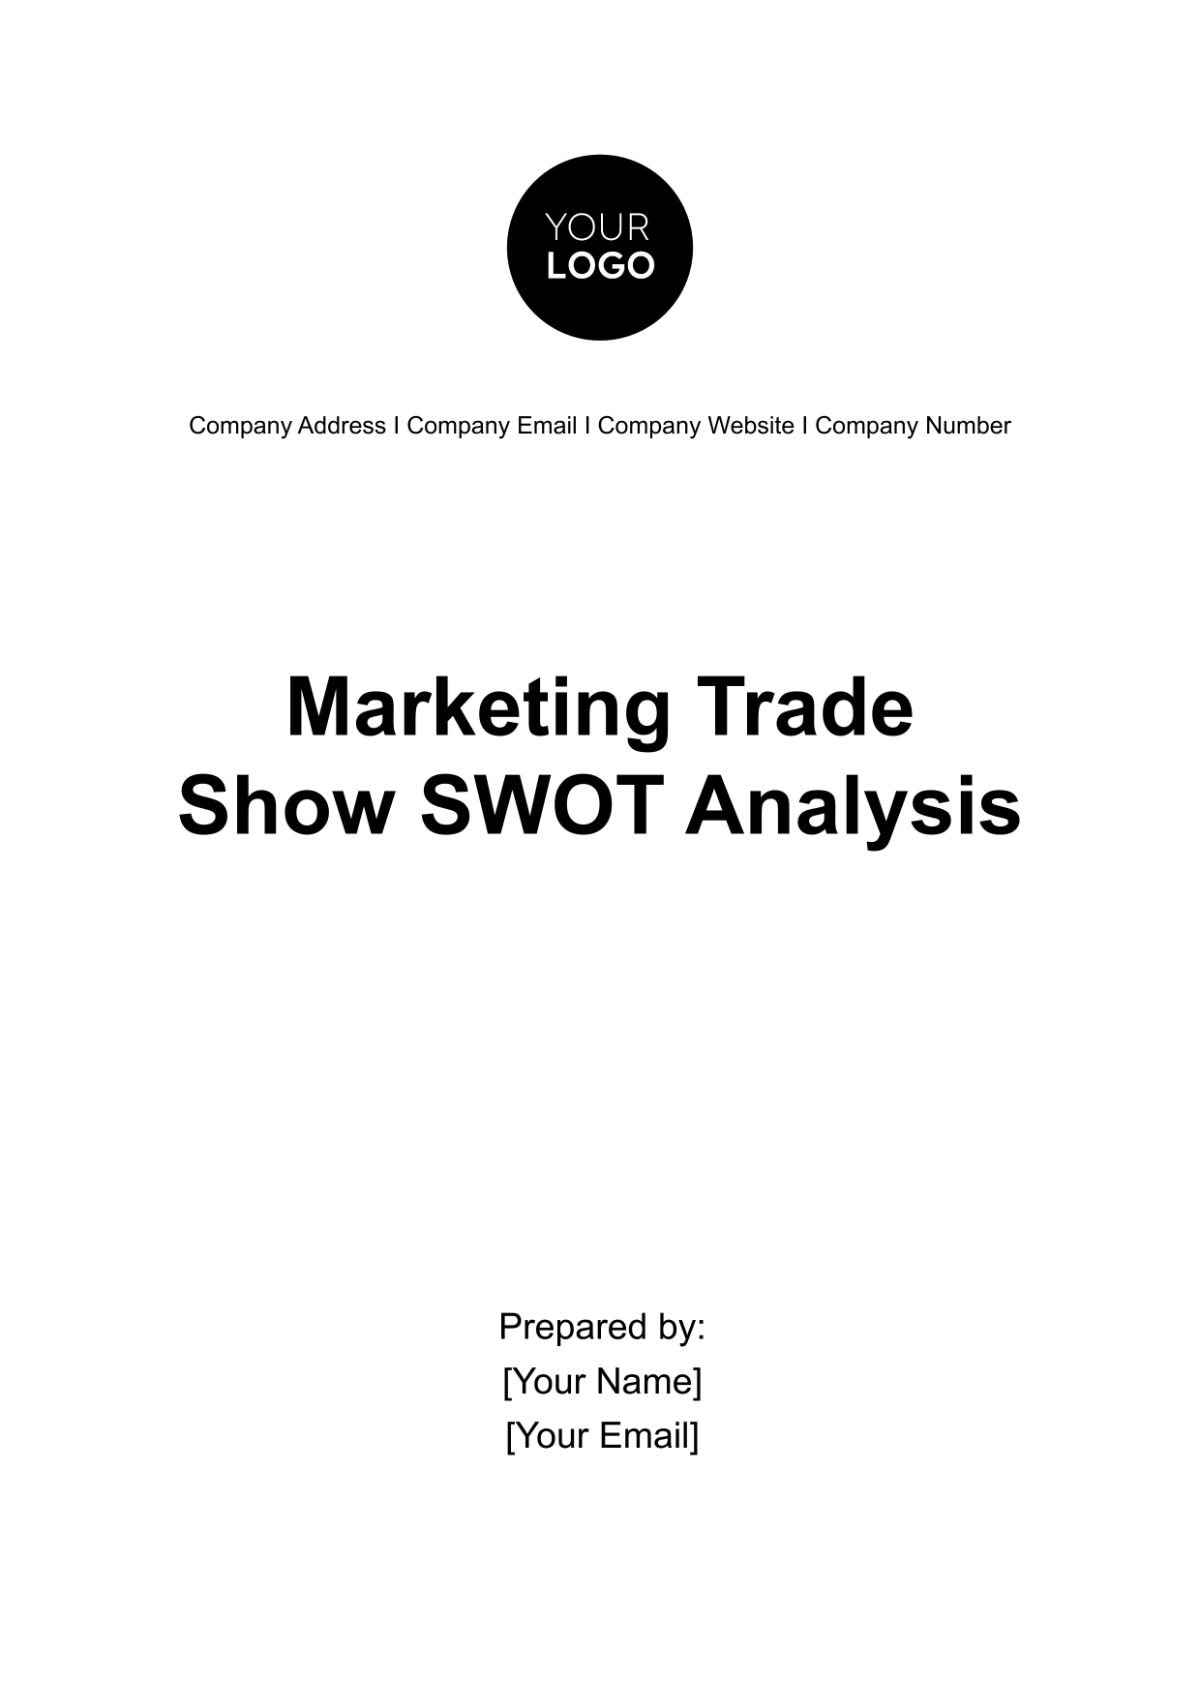 Free Marketing Trade Show SWOT Analysis Template